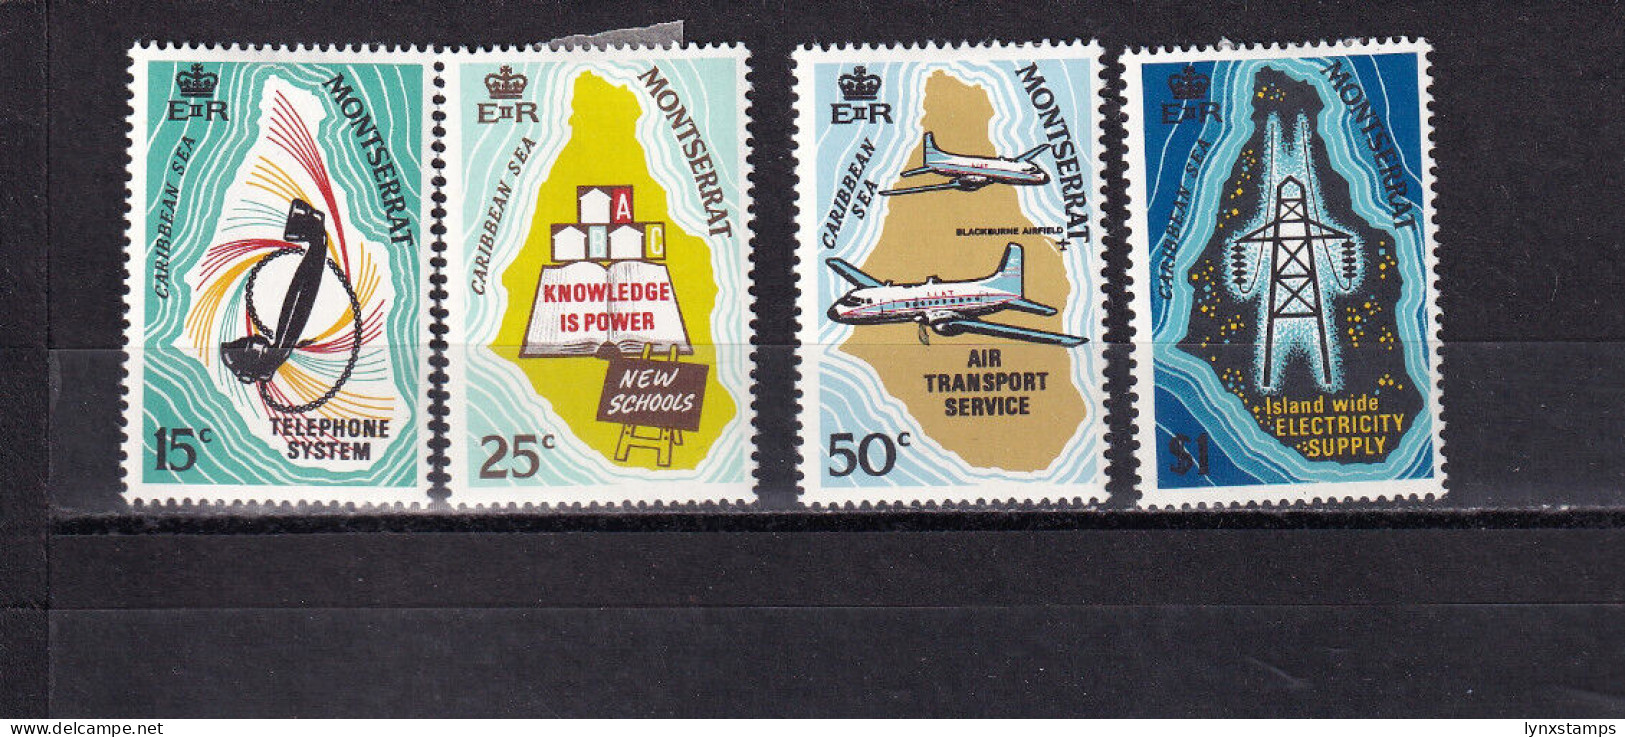 LI07 Montserrat 1969 Development Projects Mint Hinged Stamps Full Set - Montserrat